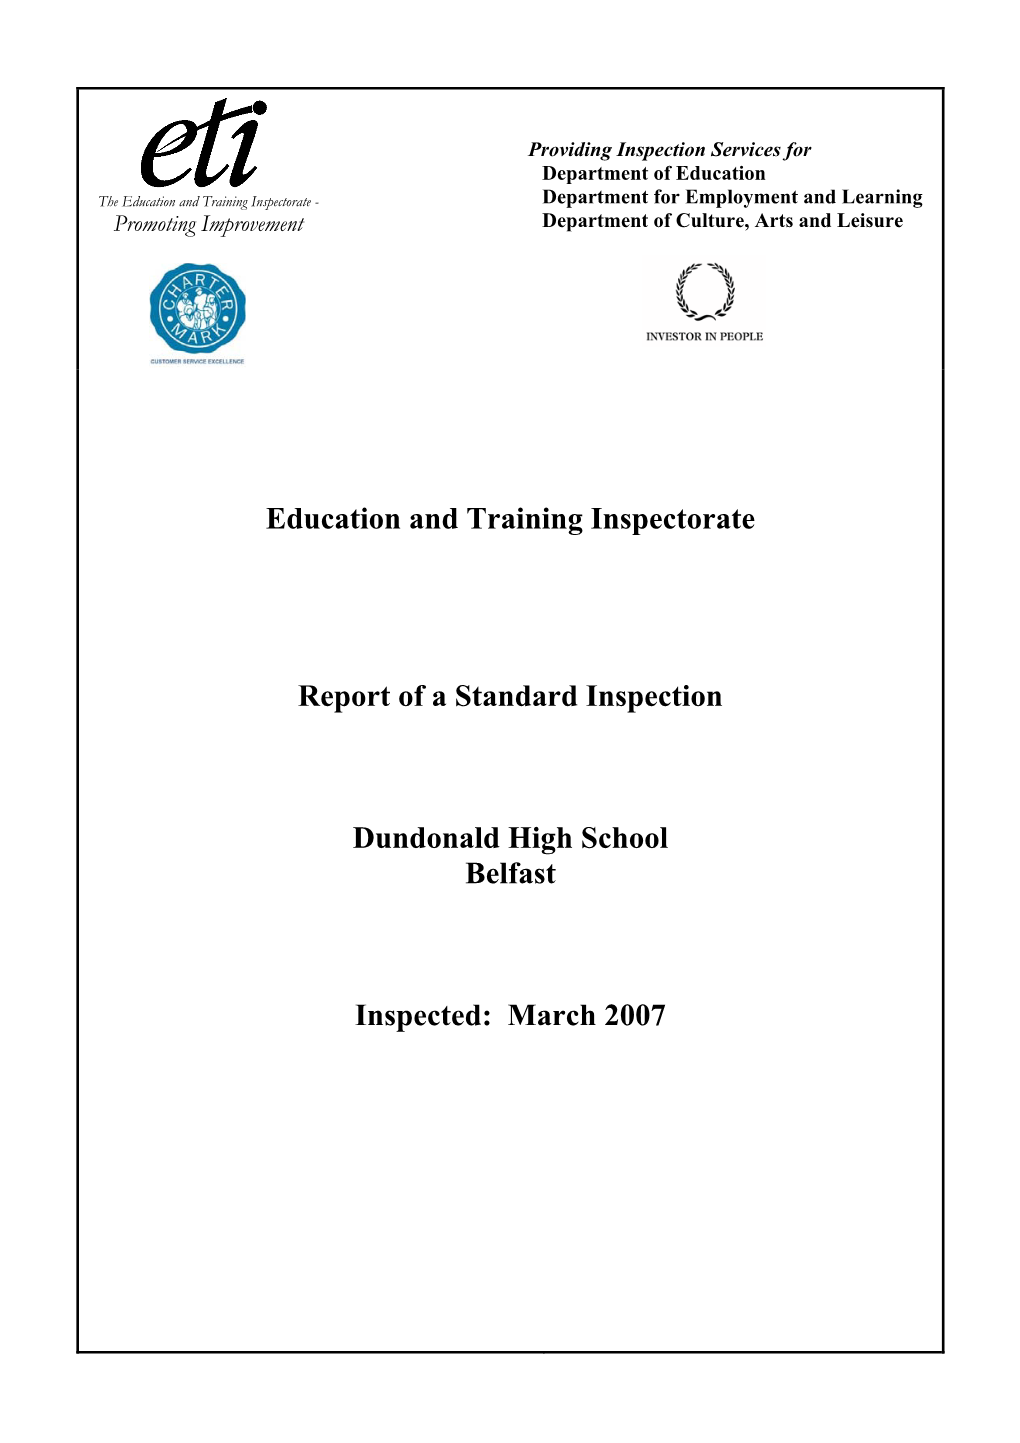 Report of a Standard Inspection of Dundonald